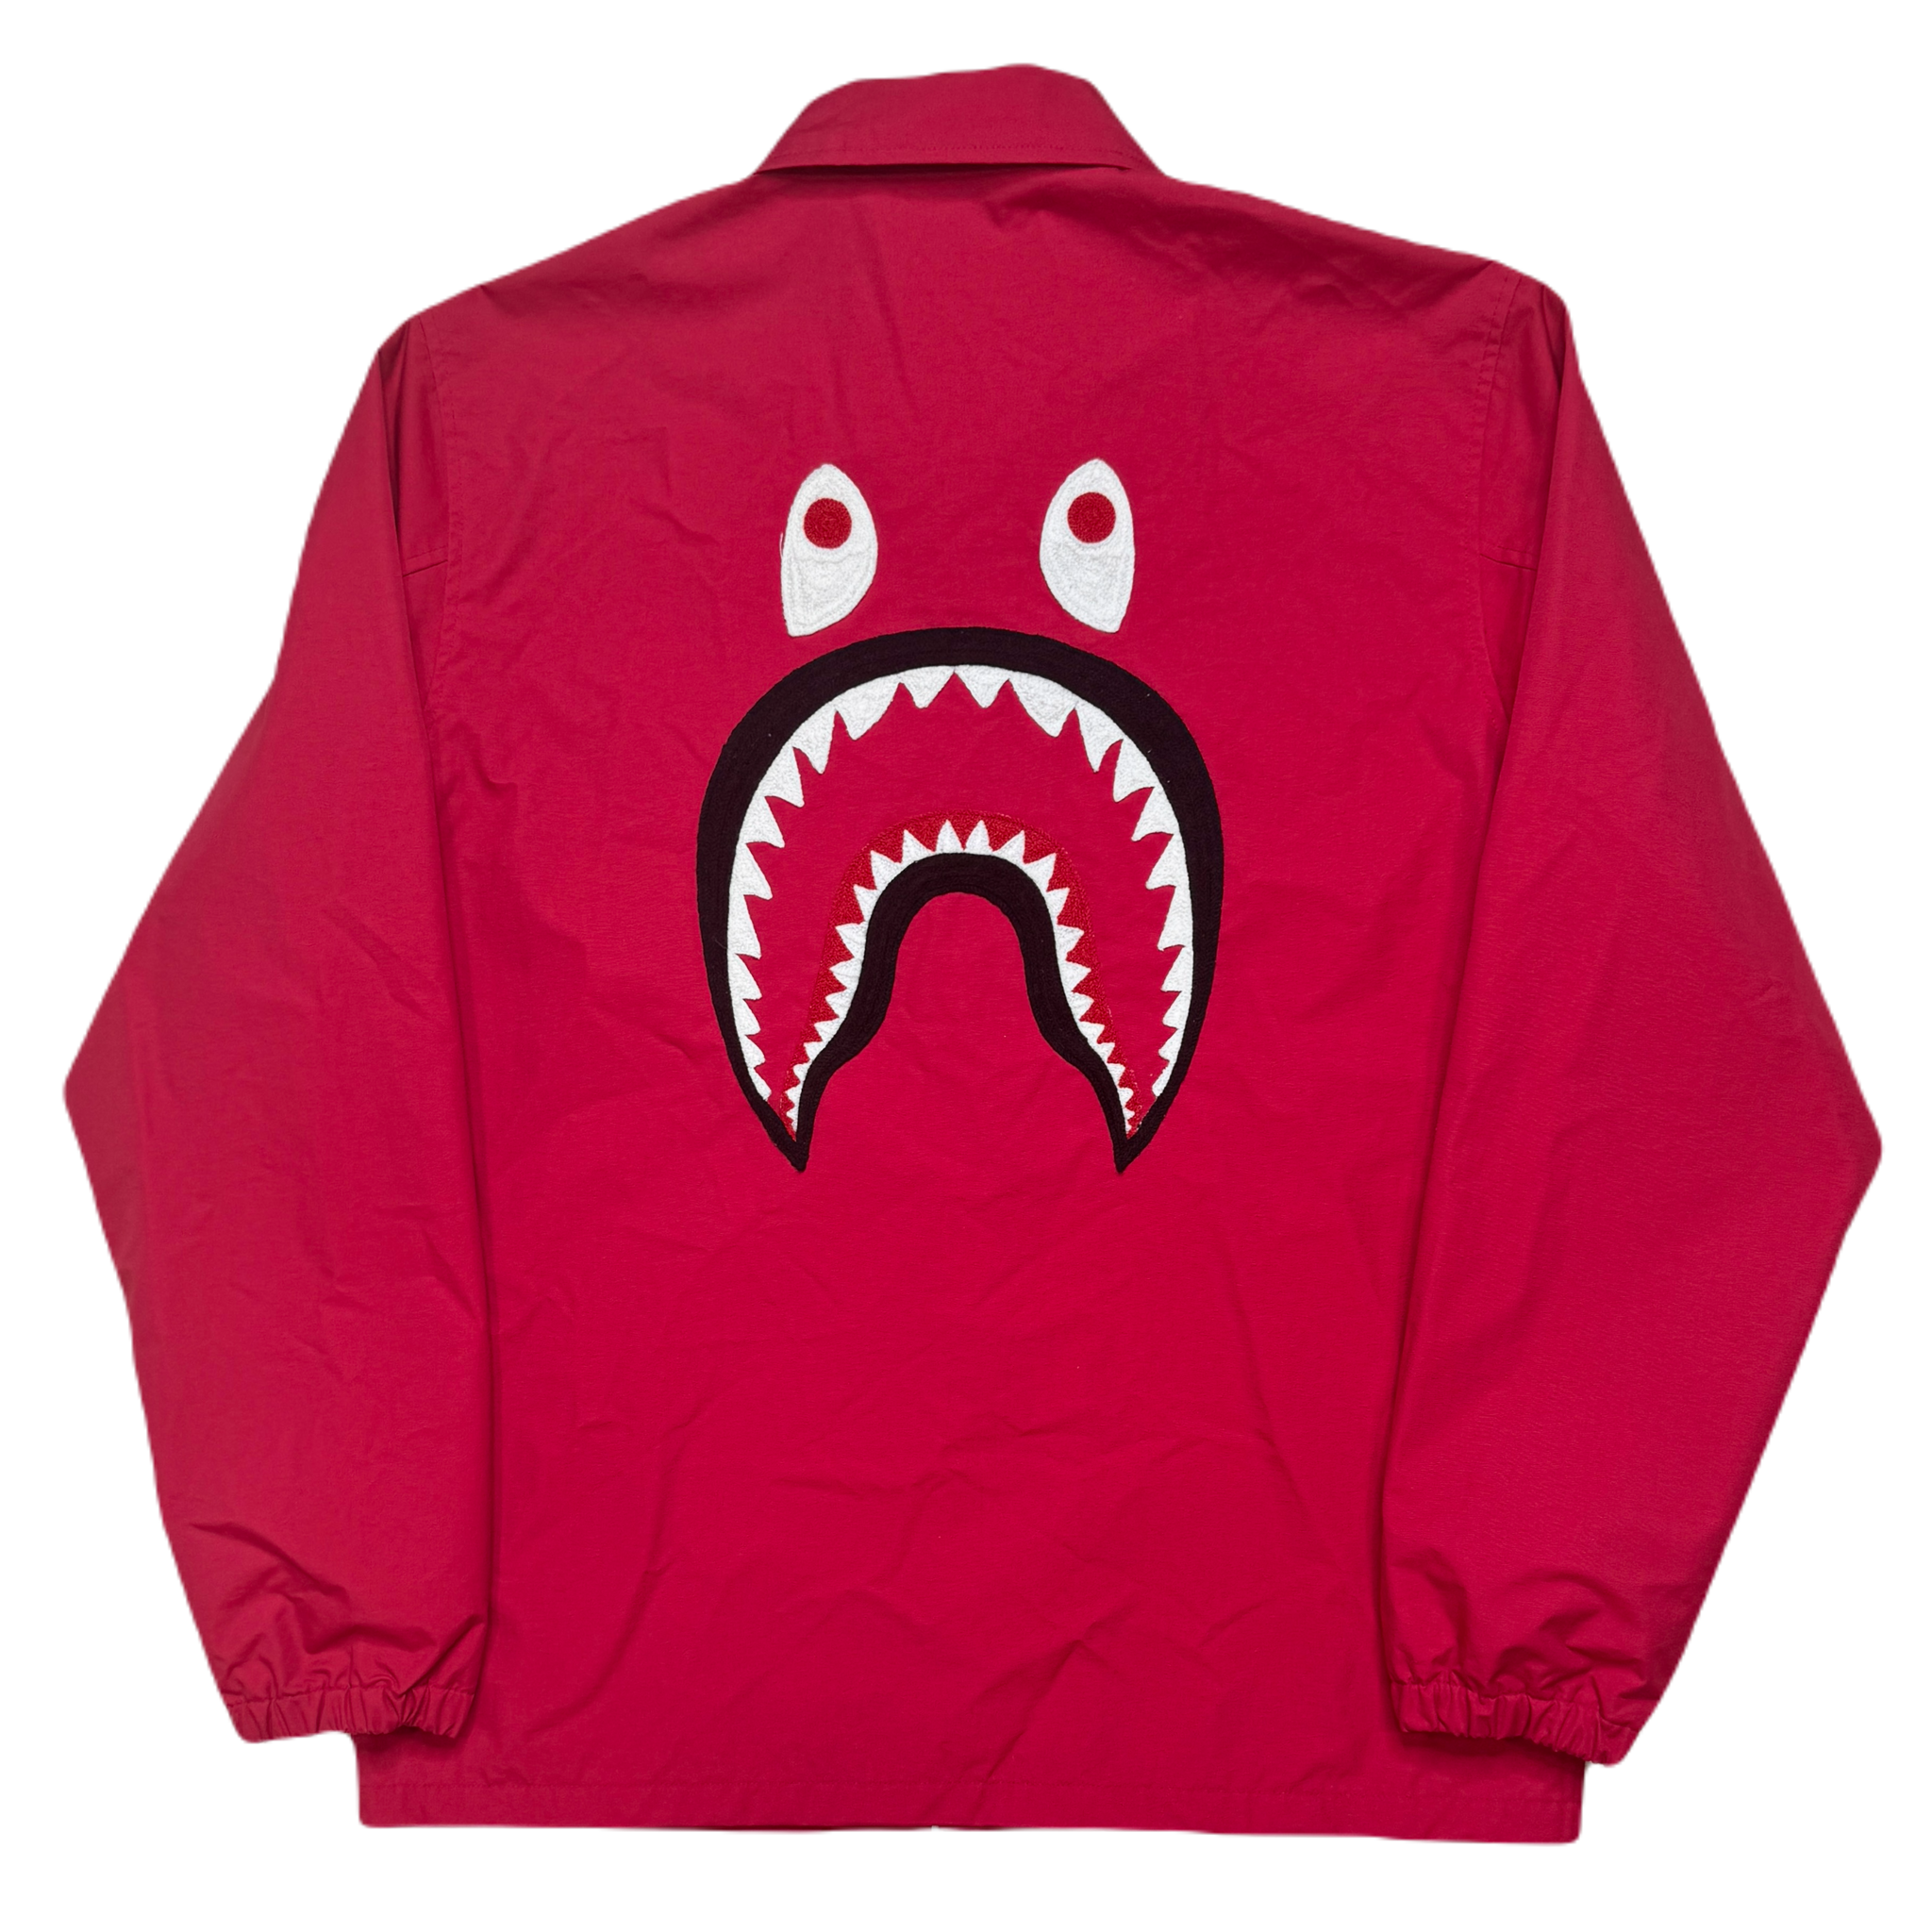 [L] Bape Red Shark Jacket